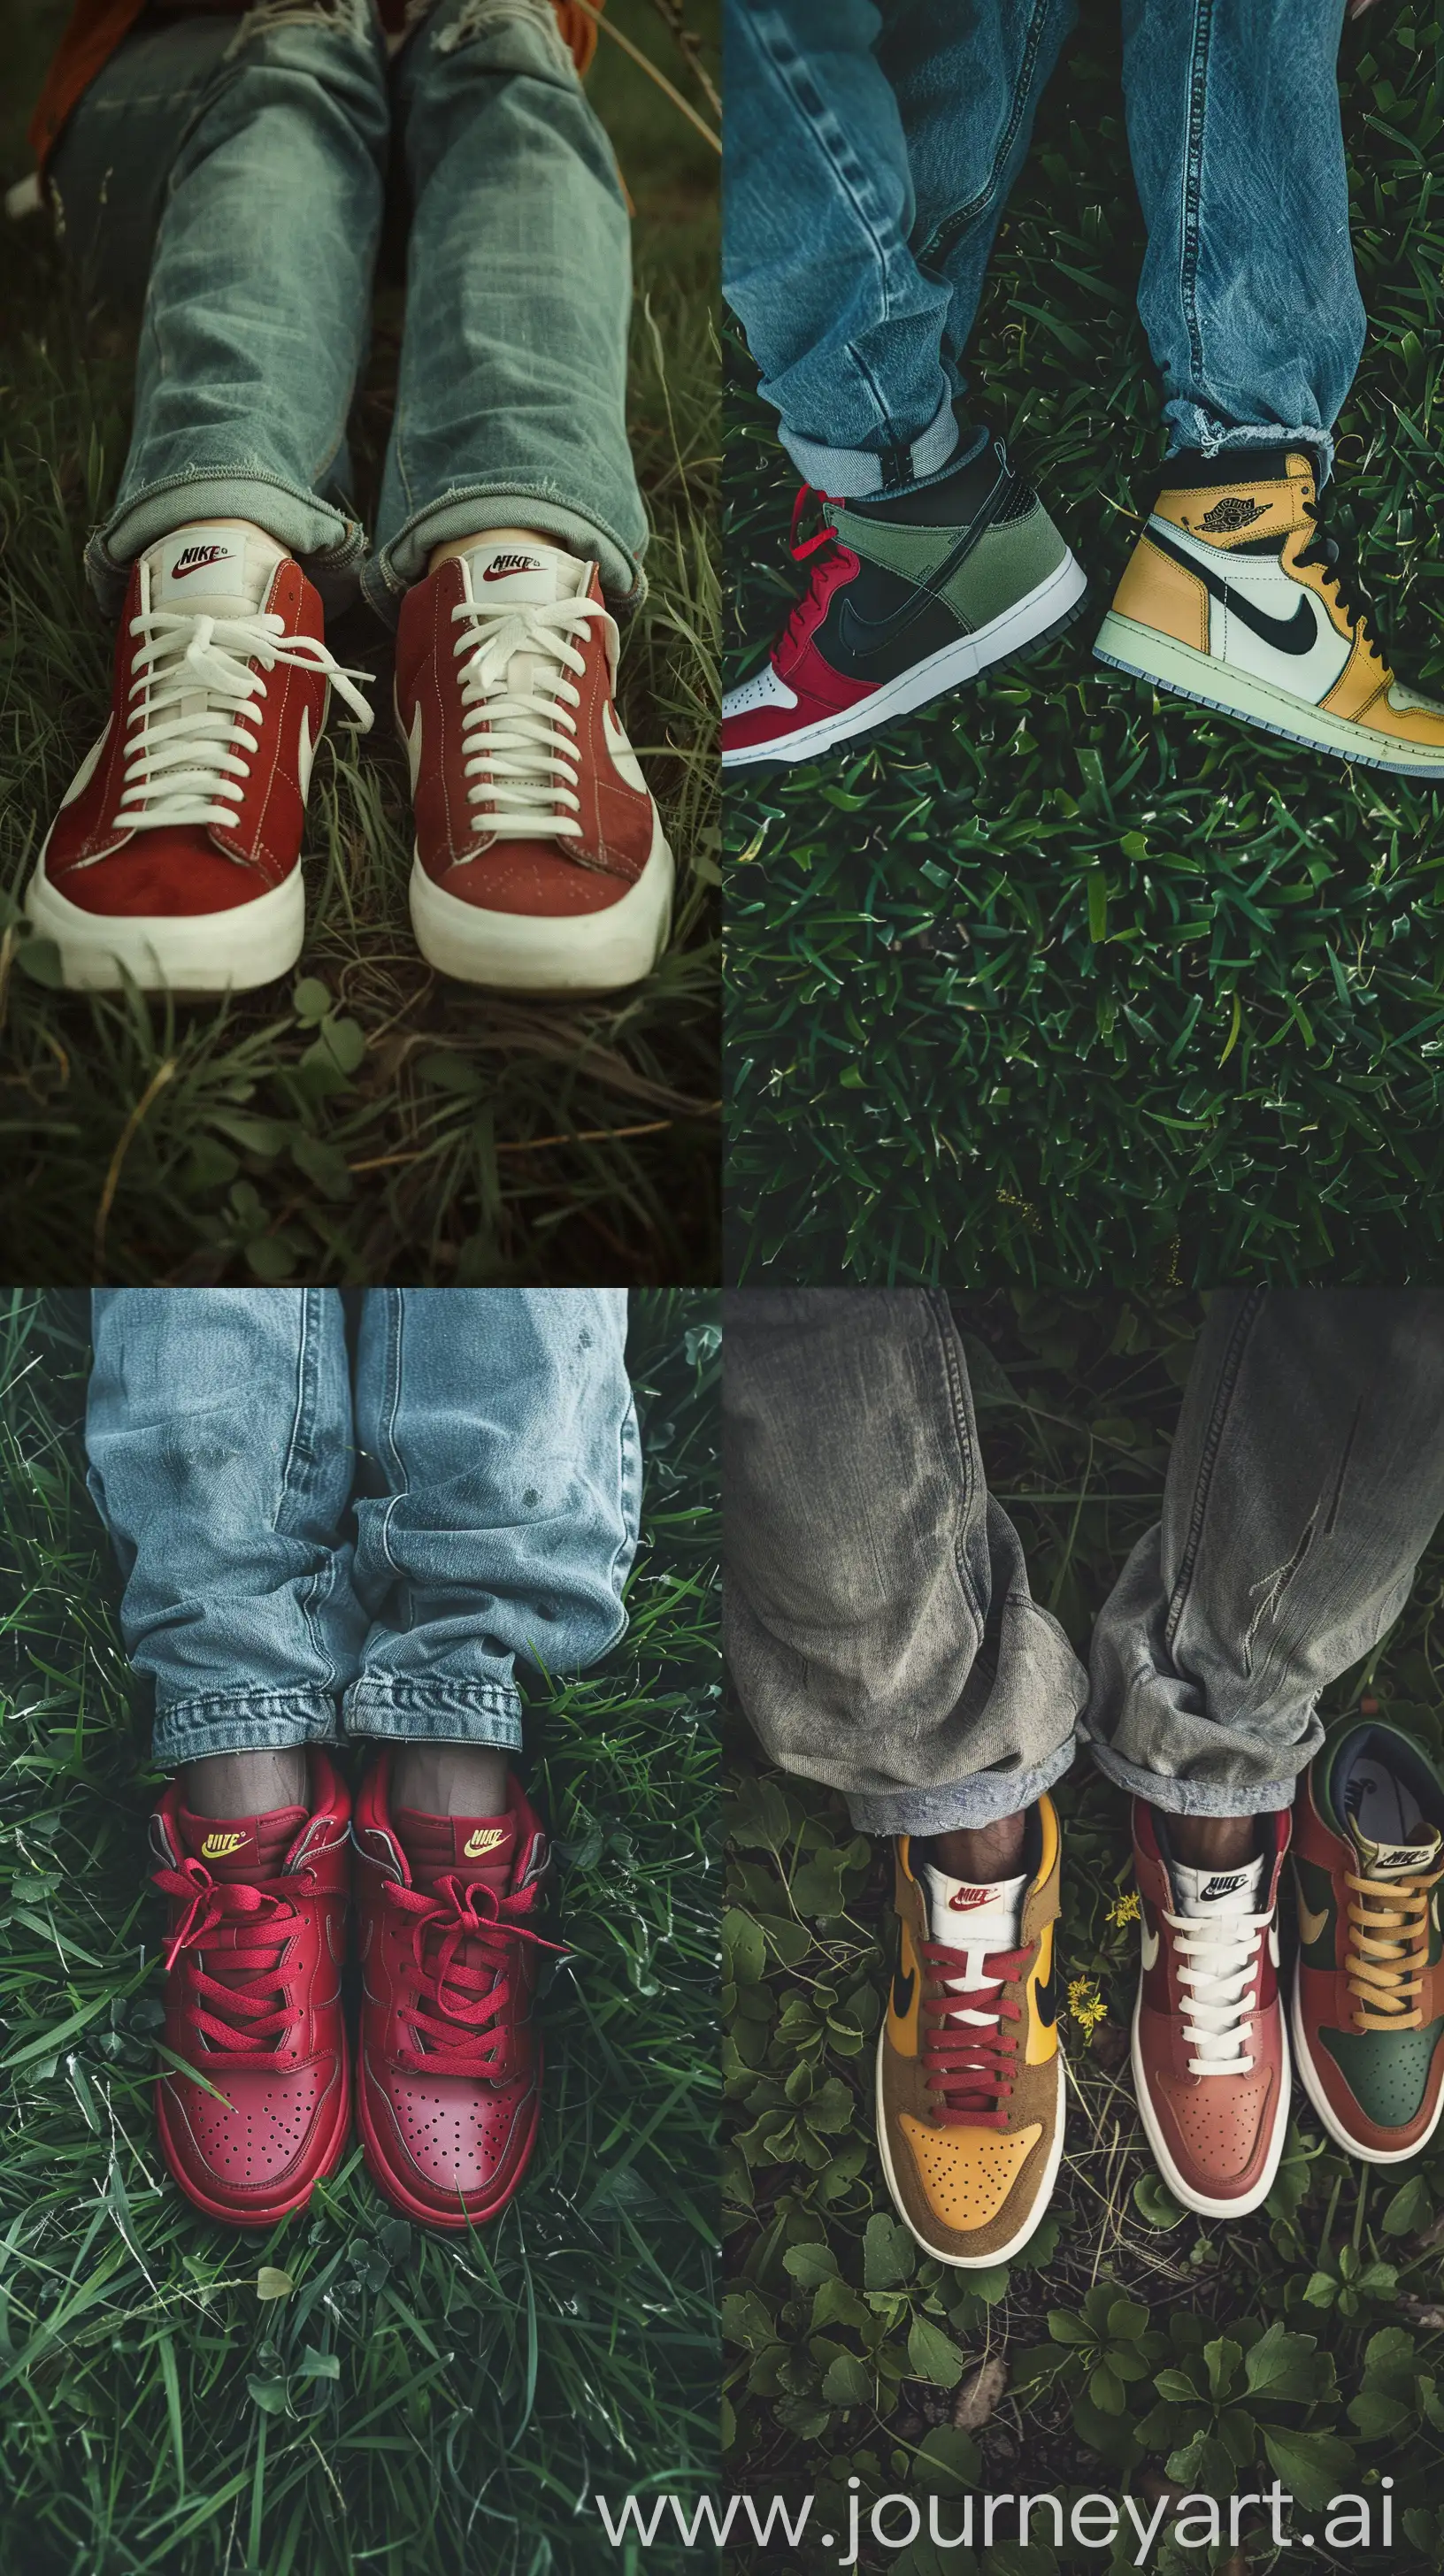 Couples-Wearing-Nike-Blazers-in-Urban-Grass-Setting